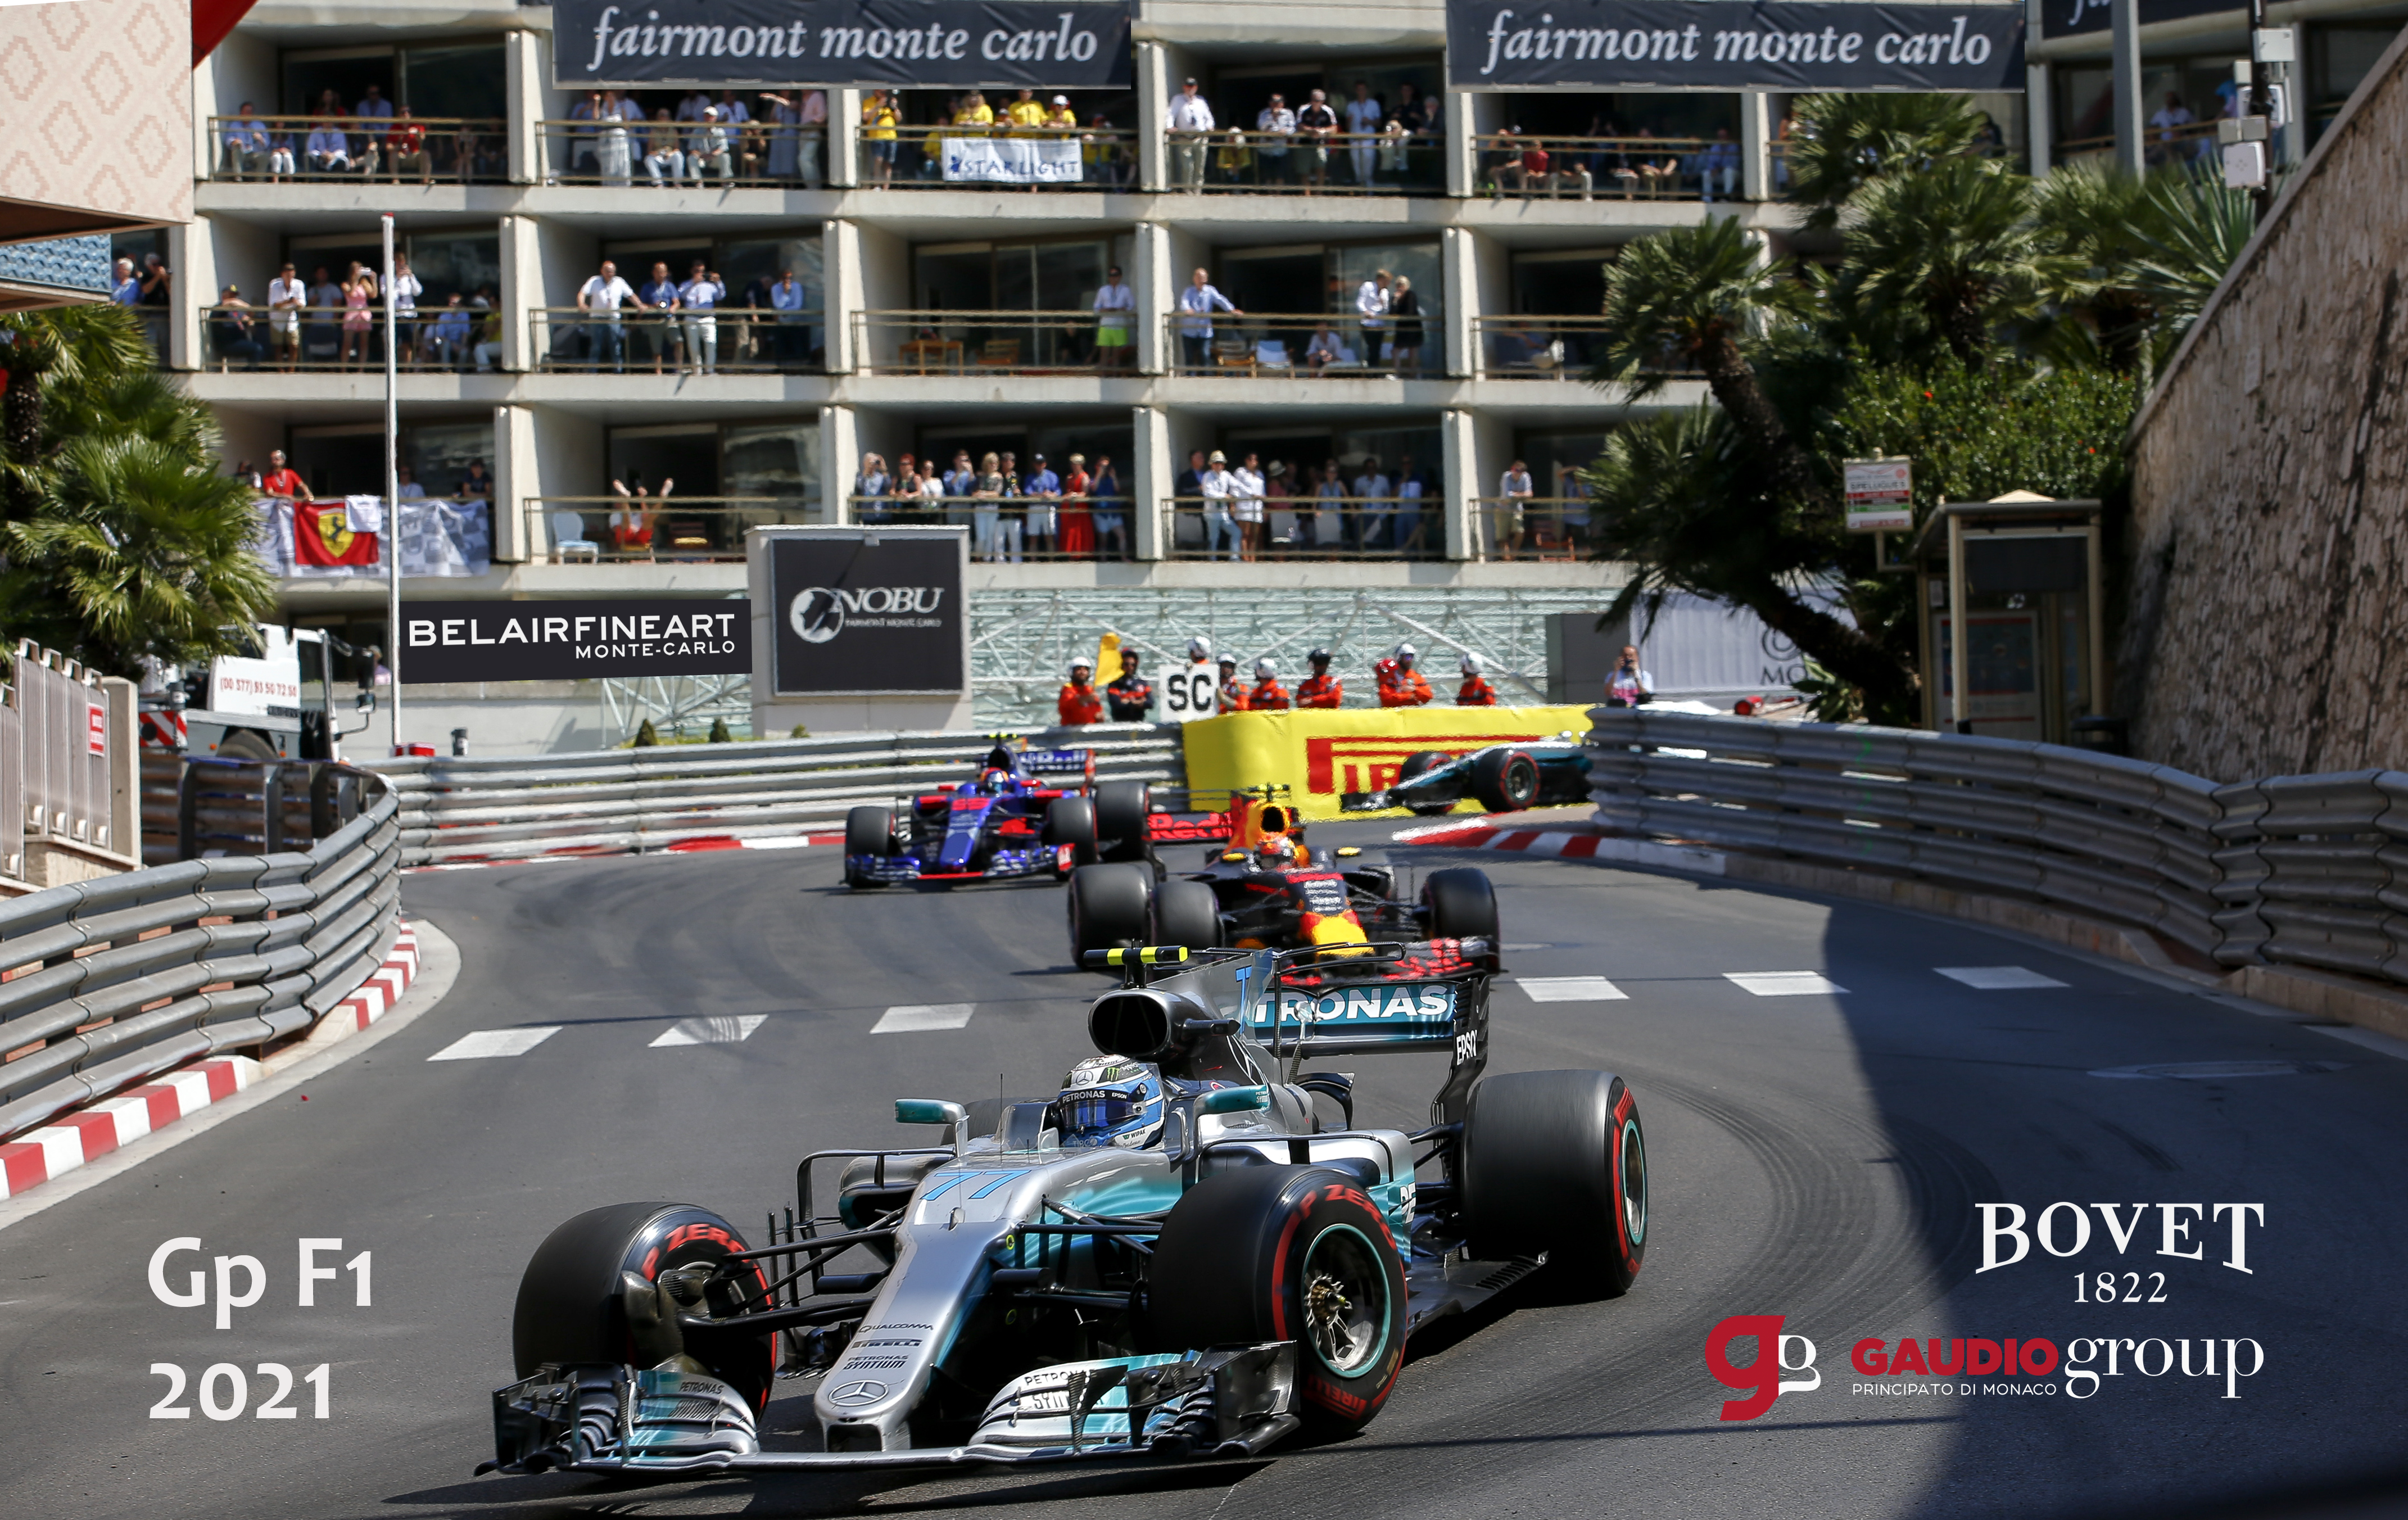 F1 and Monaco